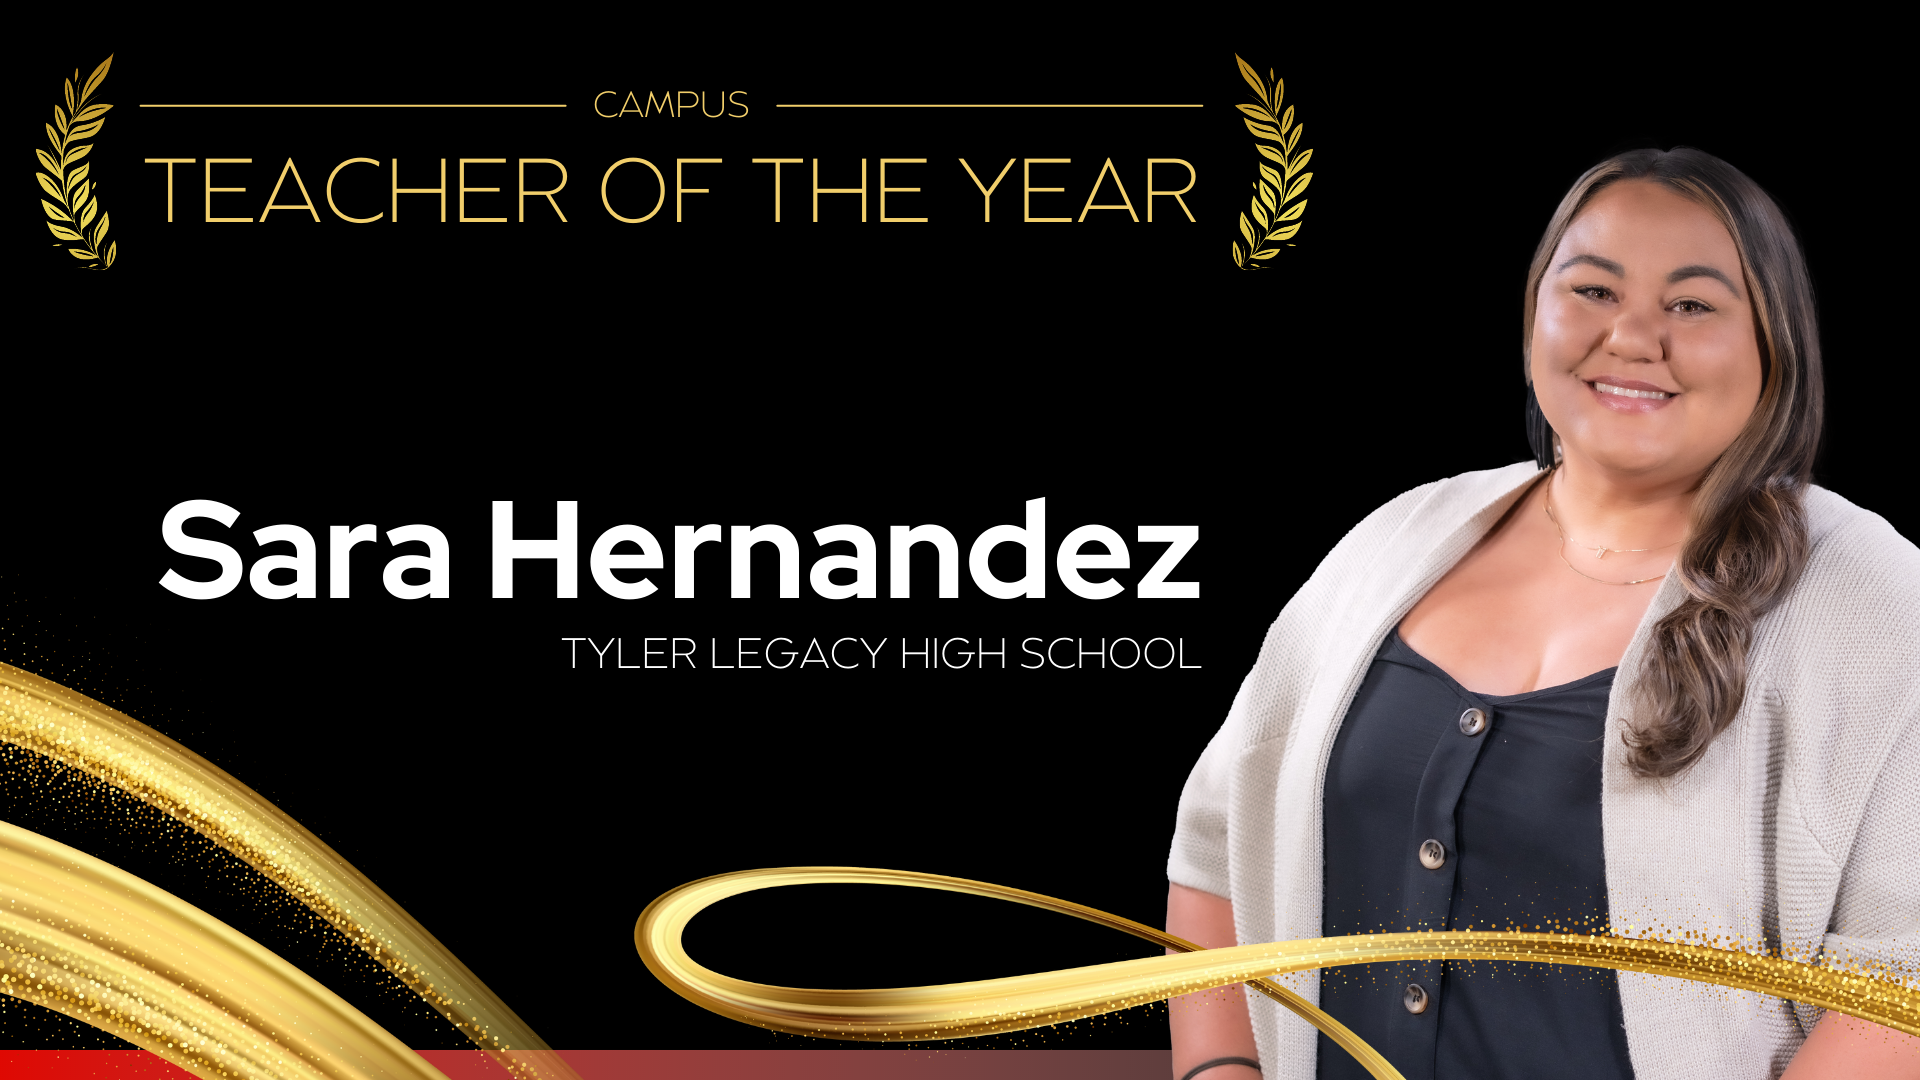 Campus Teacher of the Year Tyler Legacy High School - Sara Hernandez